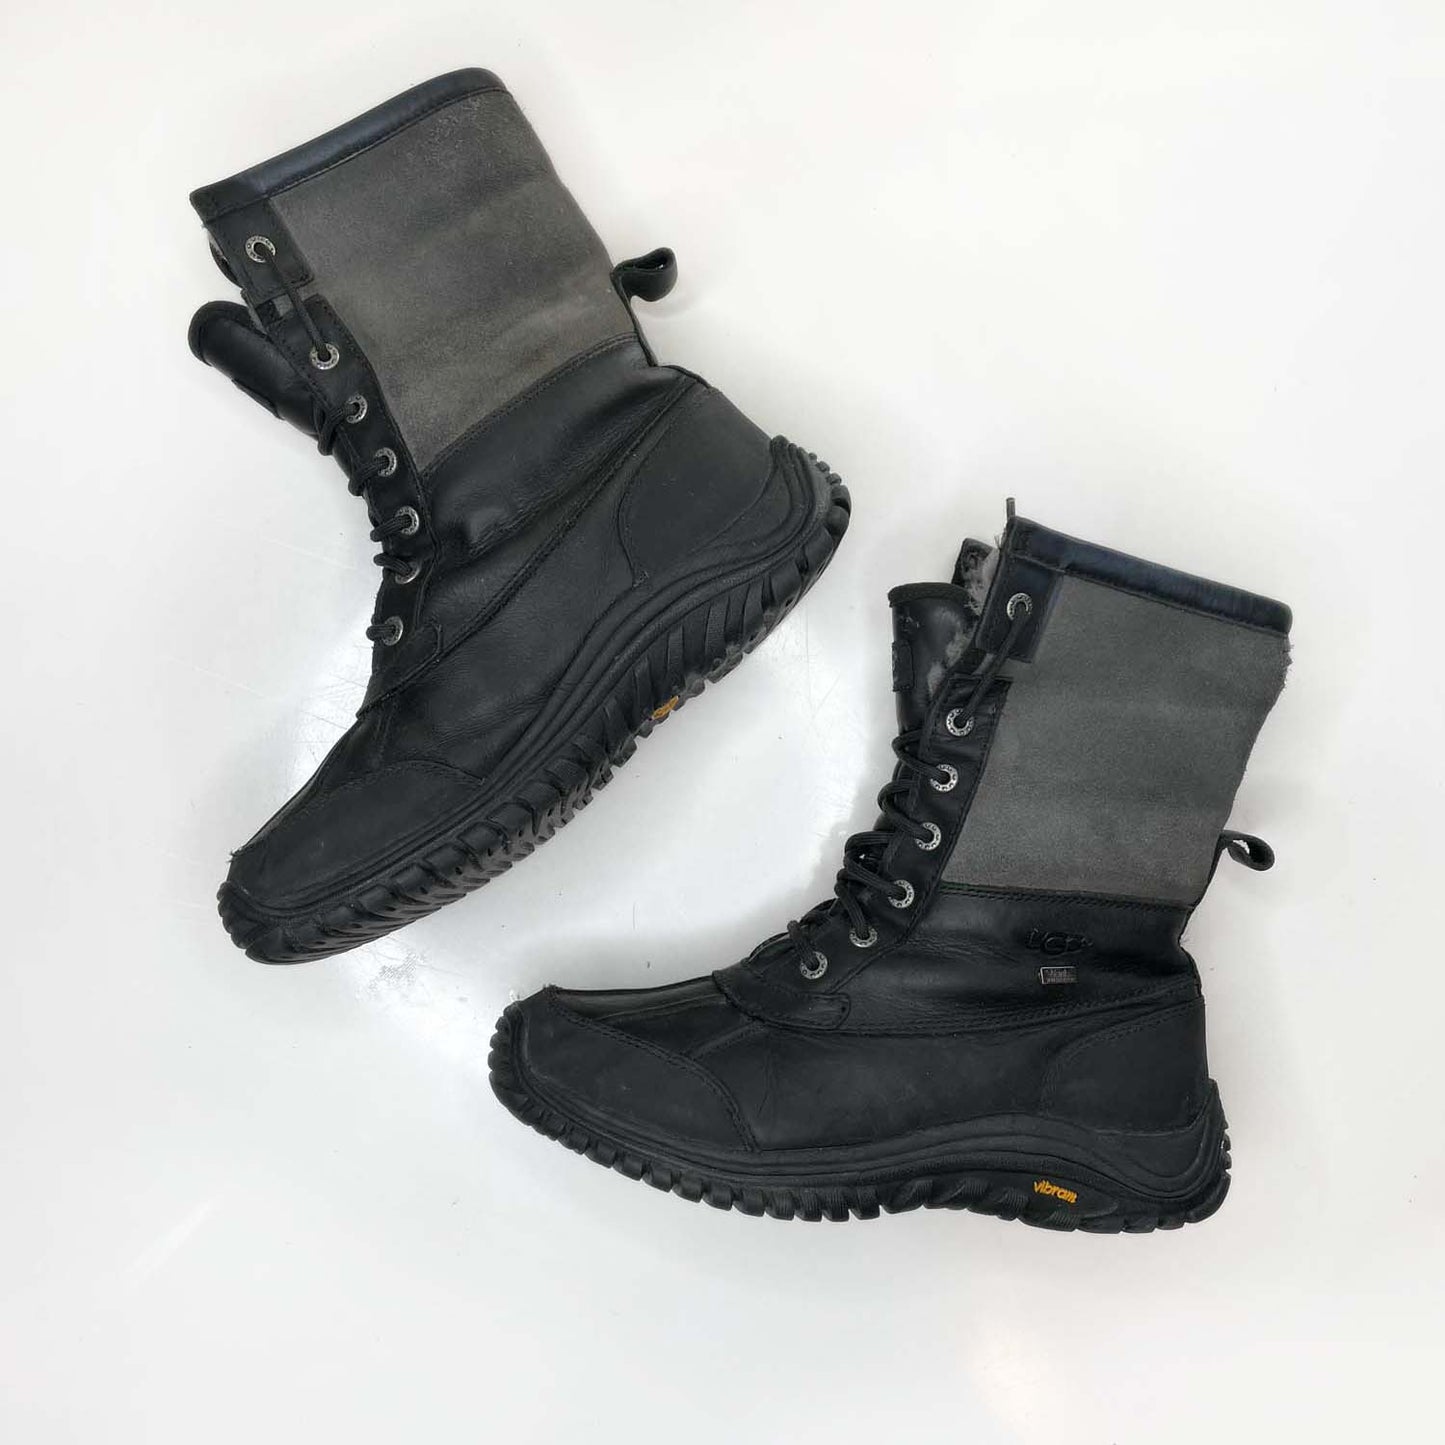 ugg adiondack II black grey sheepskin winter boots - size 10